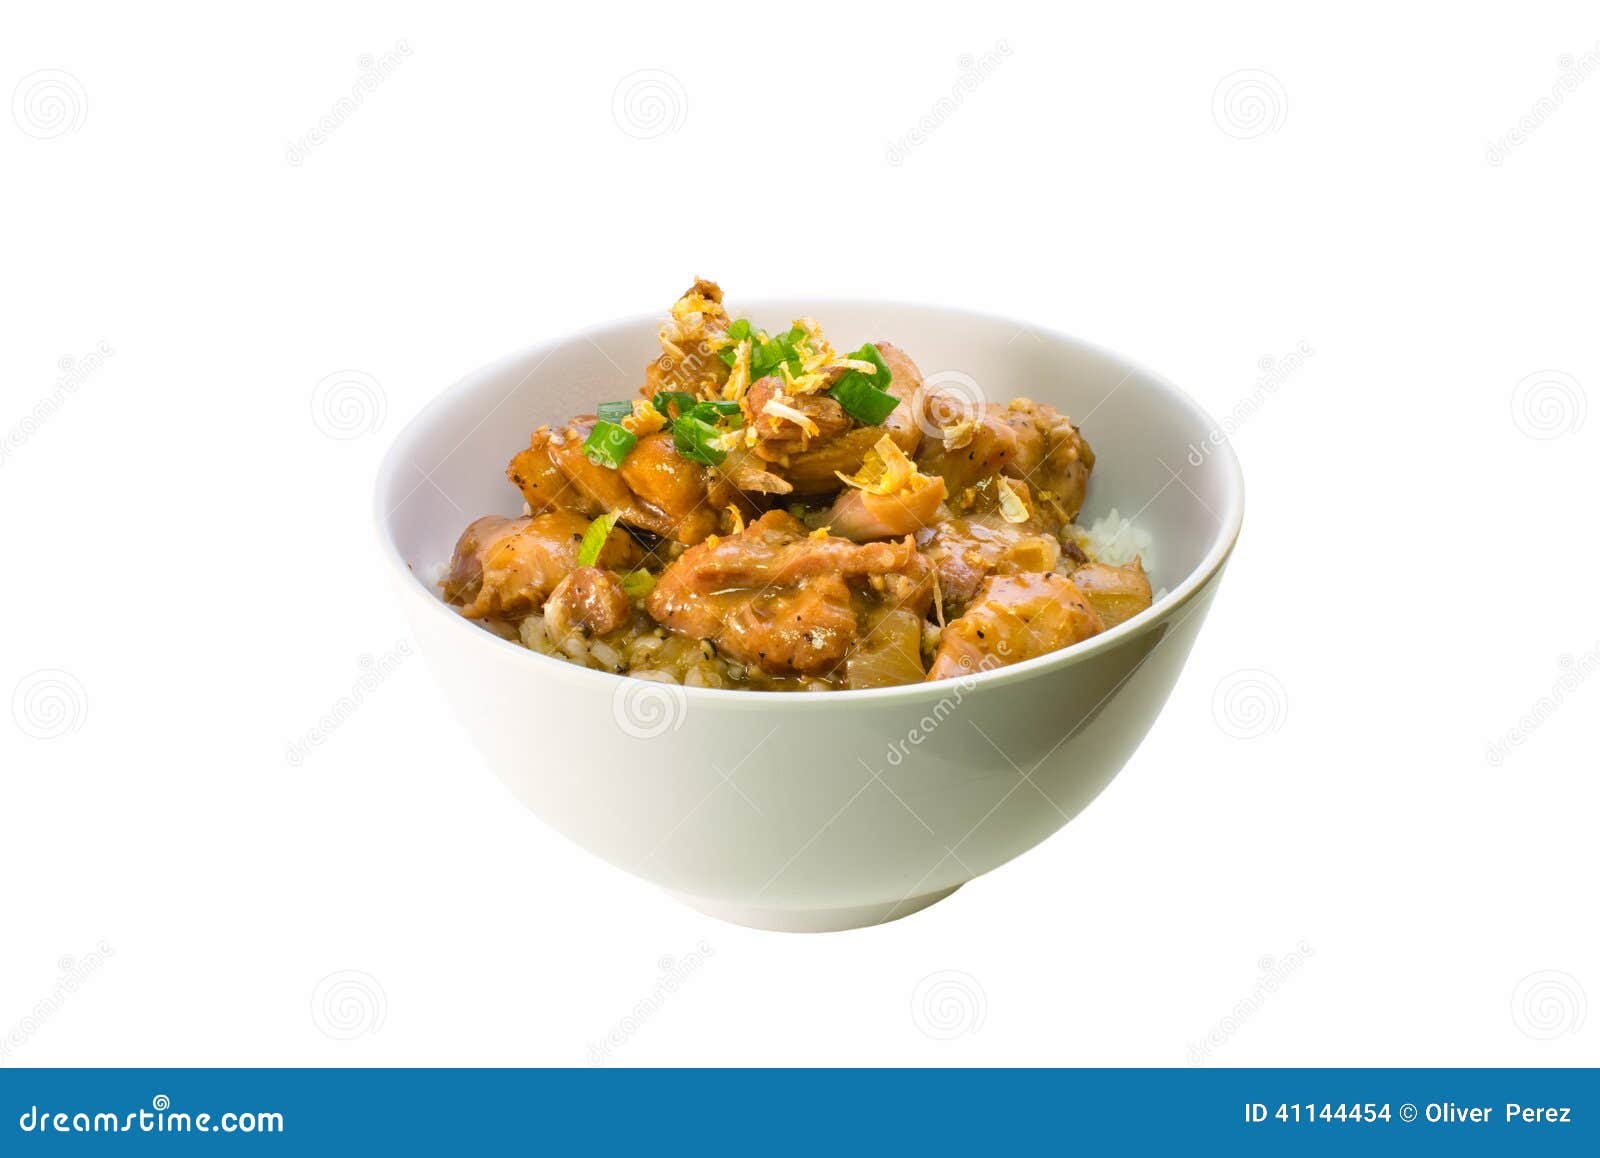 filipino chicken adobo with rice